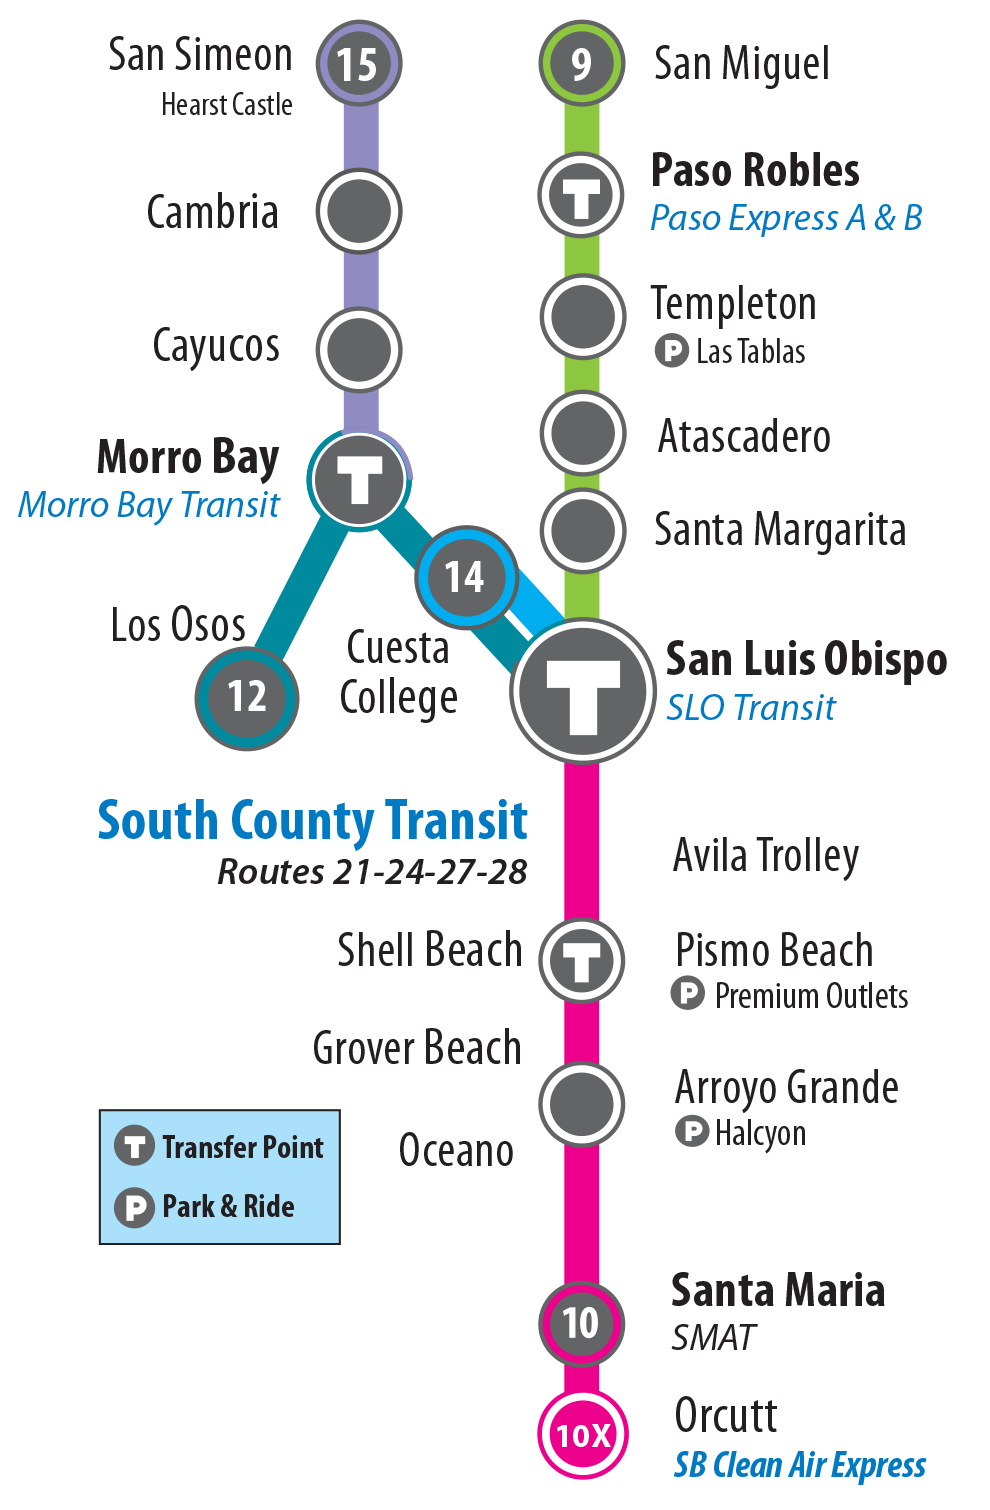 Routes Diagram